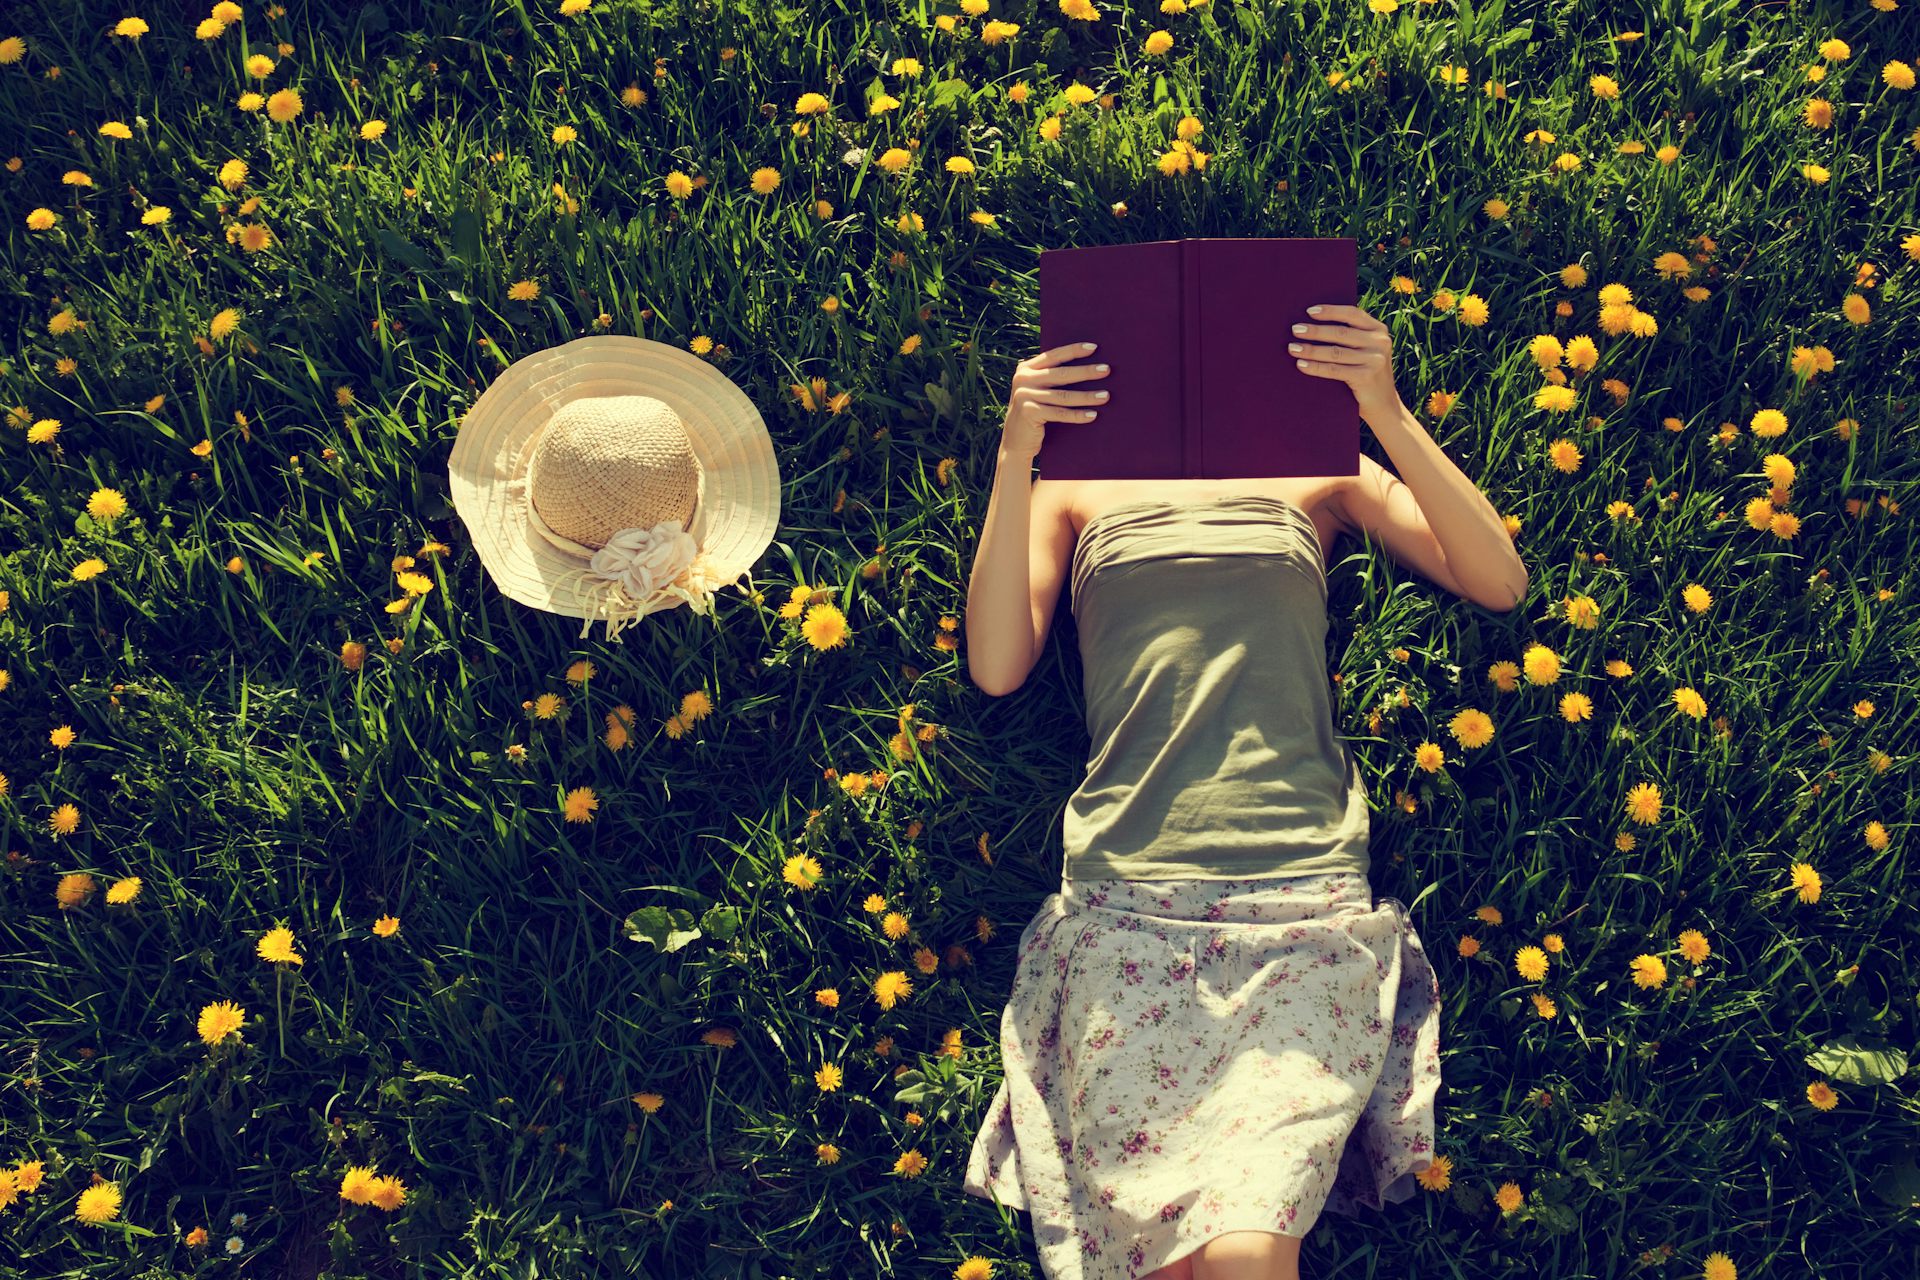 https://www.shutterstock.com/es/image-photo/girl-lying-grass-reading-book-intentionally-279658988